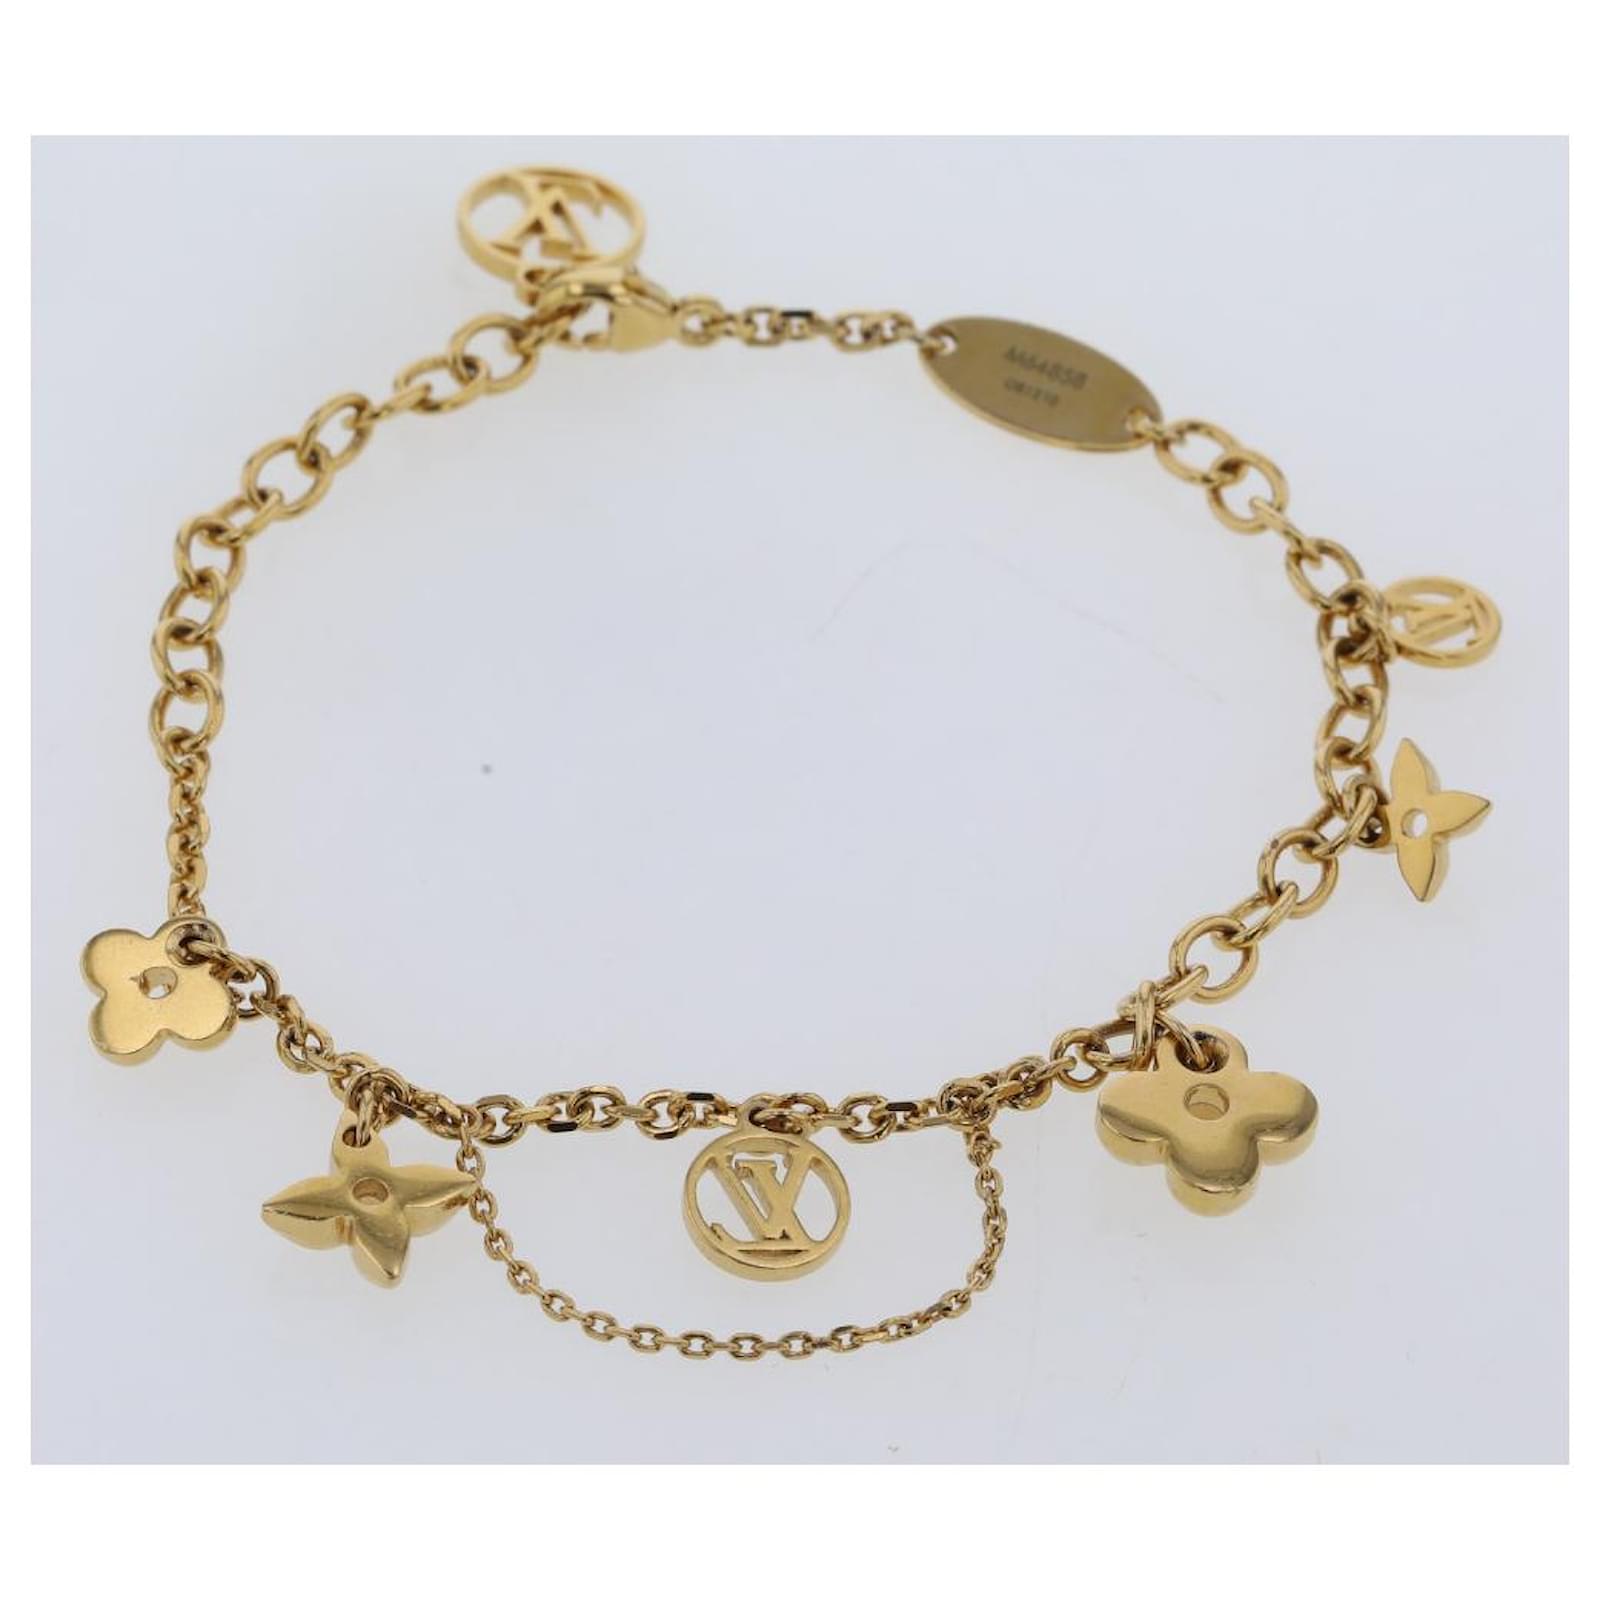 Louis Vuitton Blooming supple bracelet (M64858)